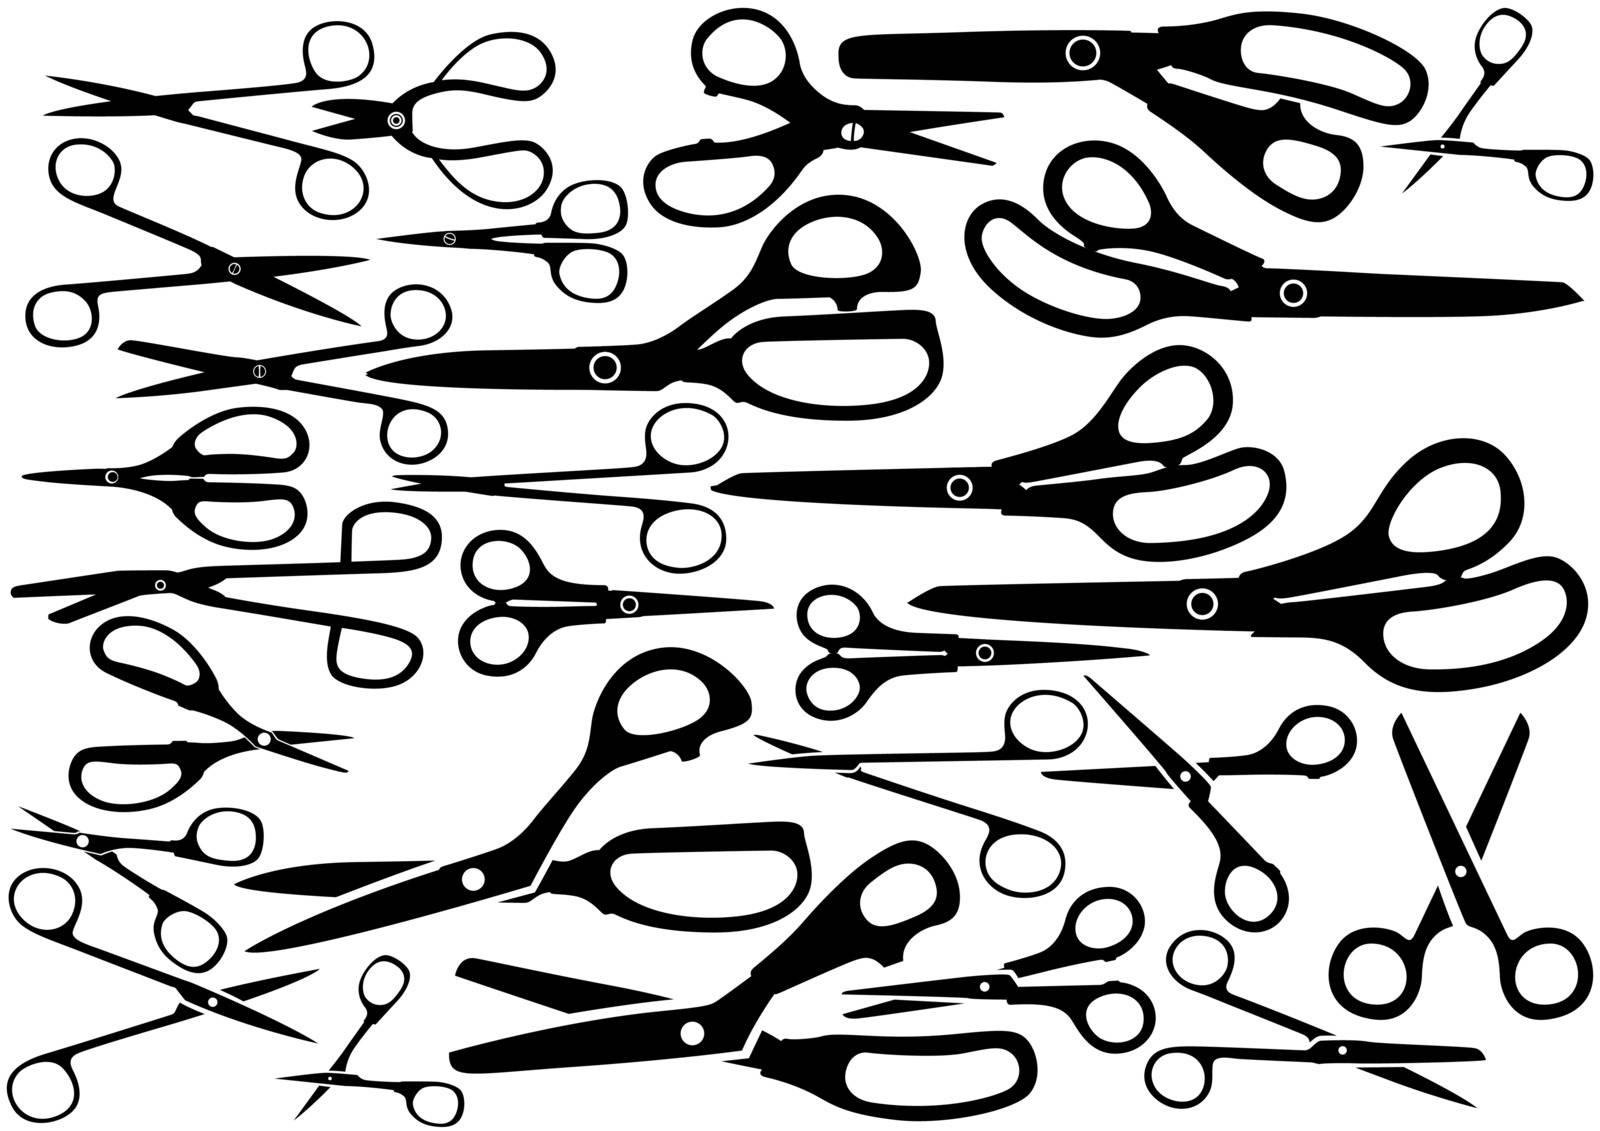 Set of Scissors Silhouettes by illustratorCZ